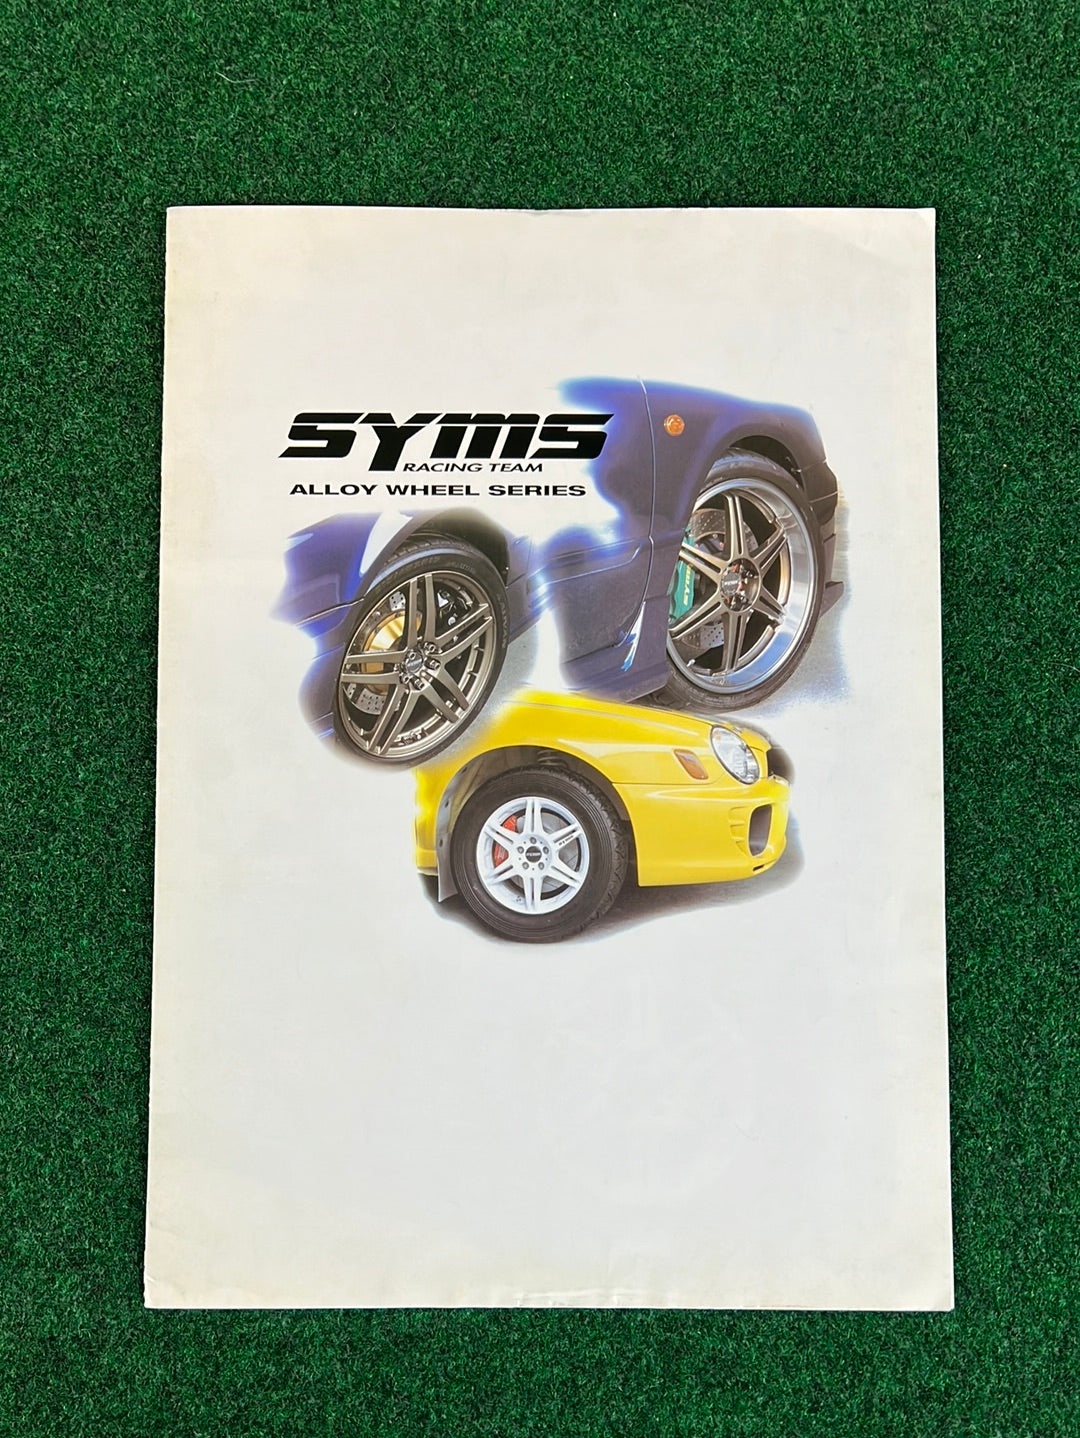 SYMS - 2002 Alloy Wheel Series Brochure